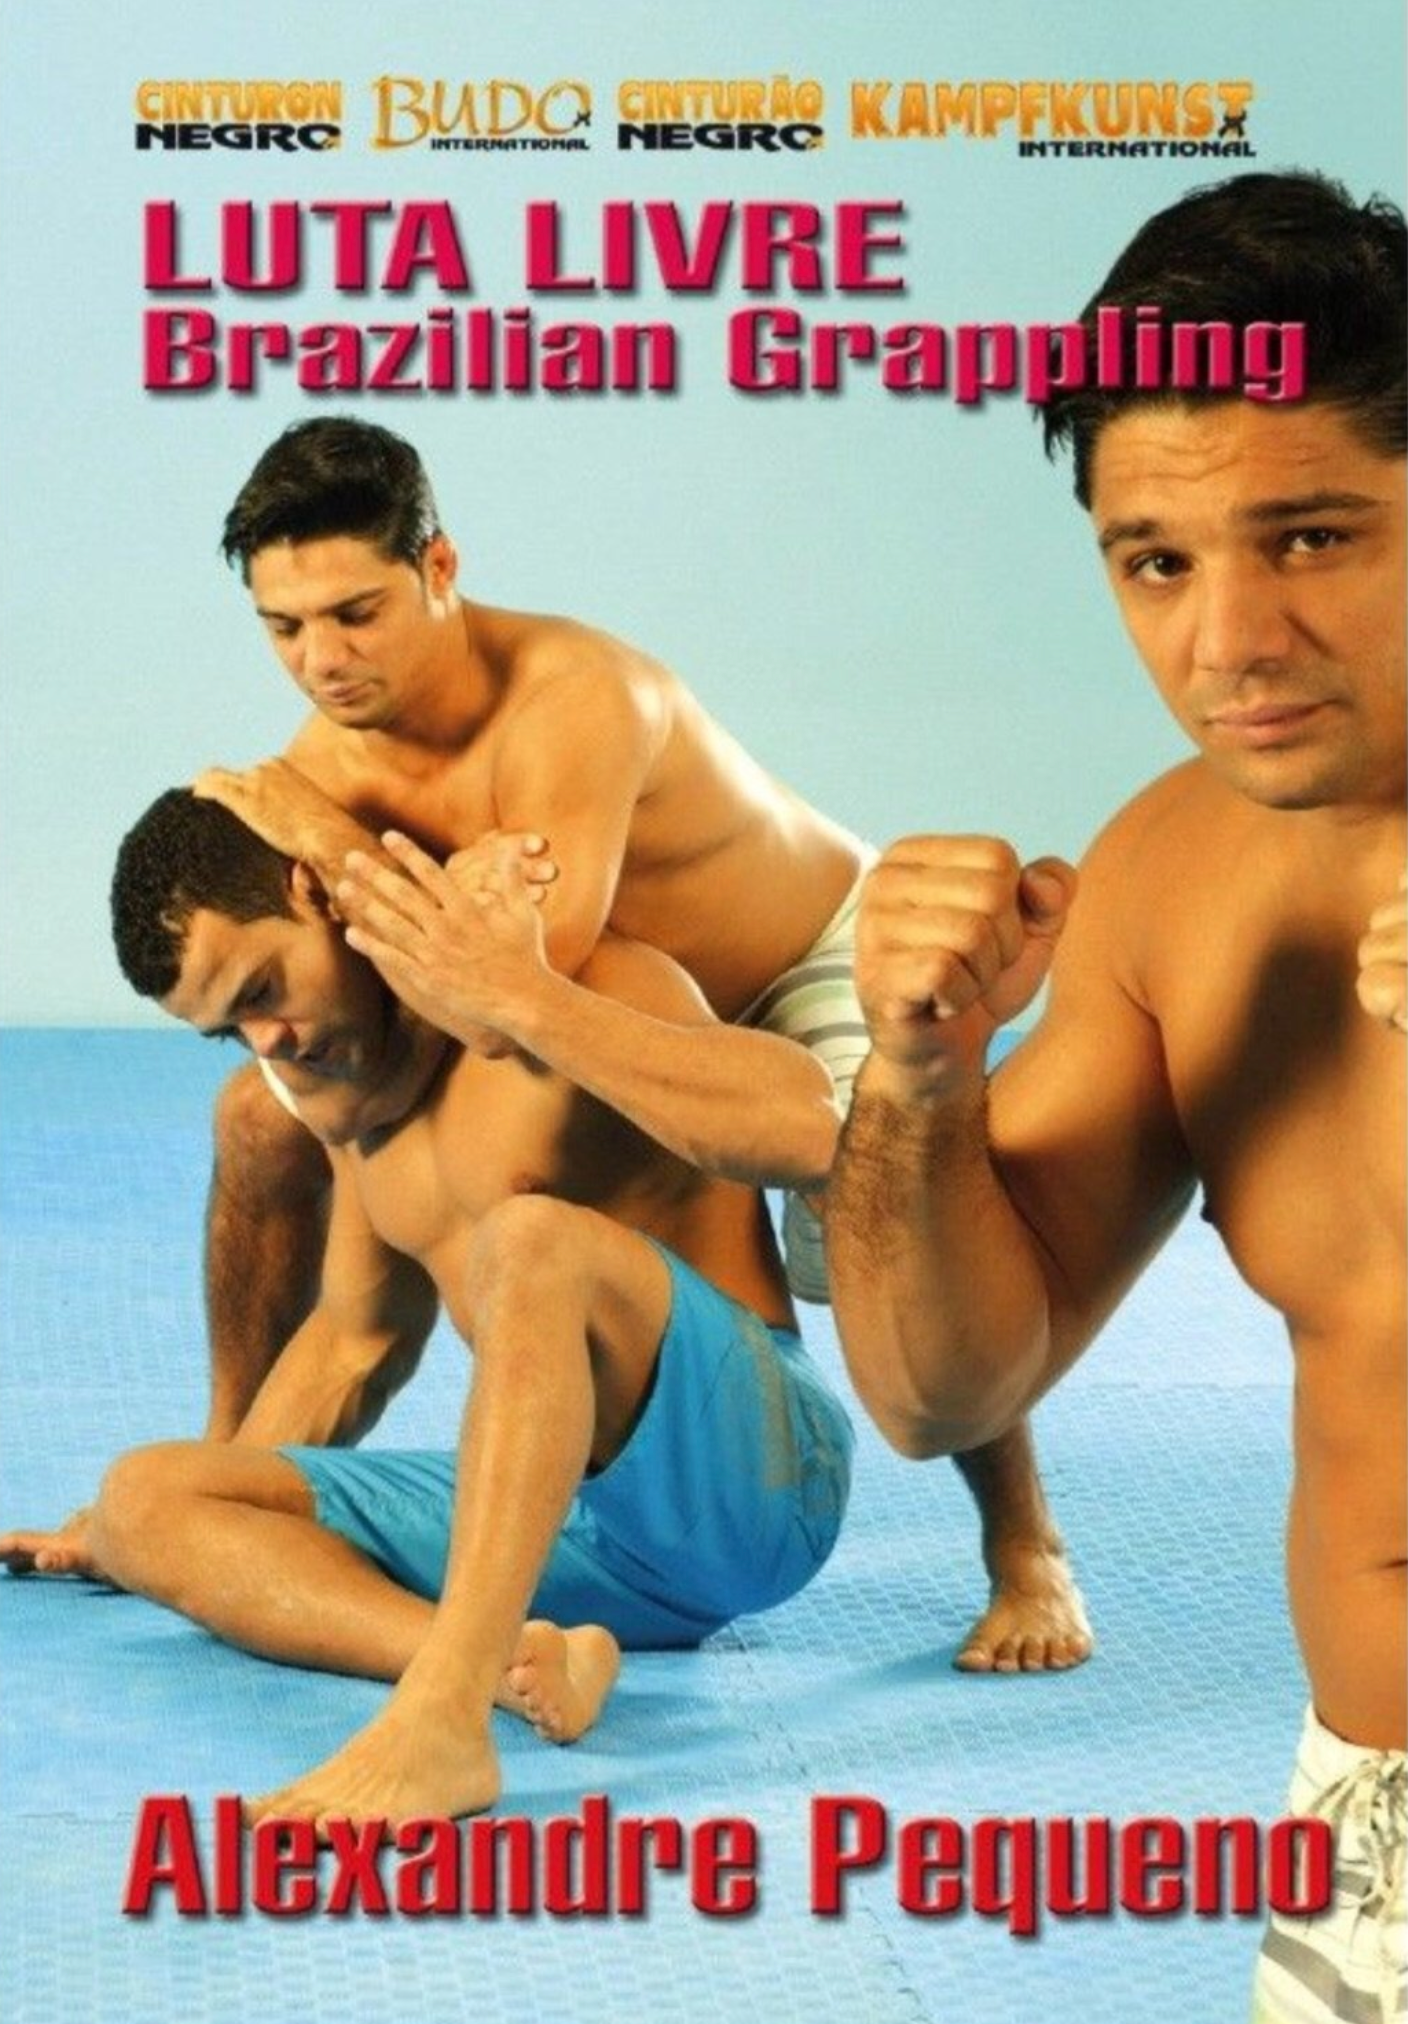 Luta Livre Brazilian Grappling DVD by Alexandre Pequeno - Budovideos Inc